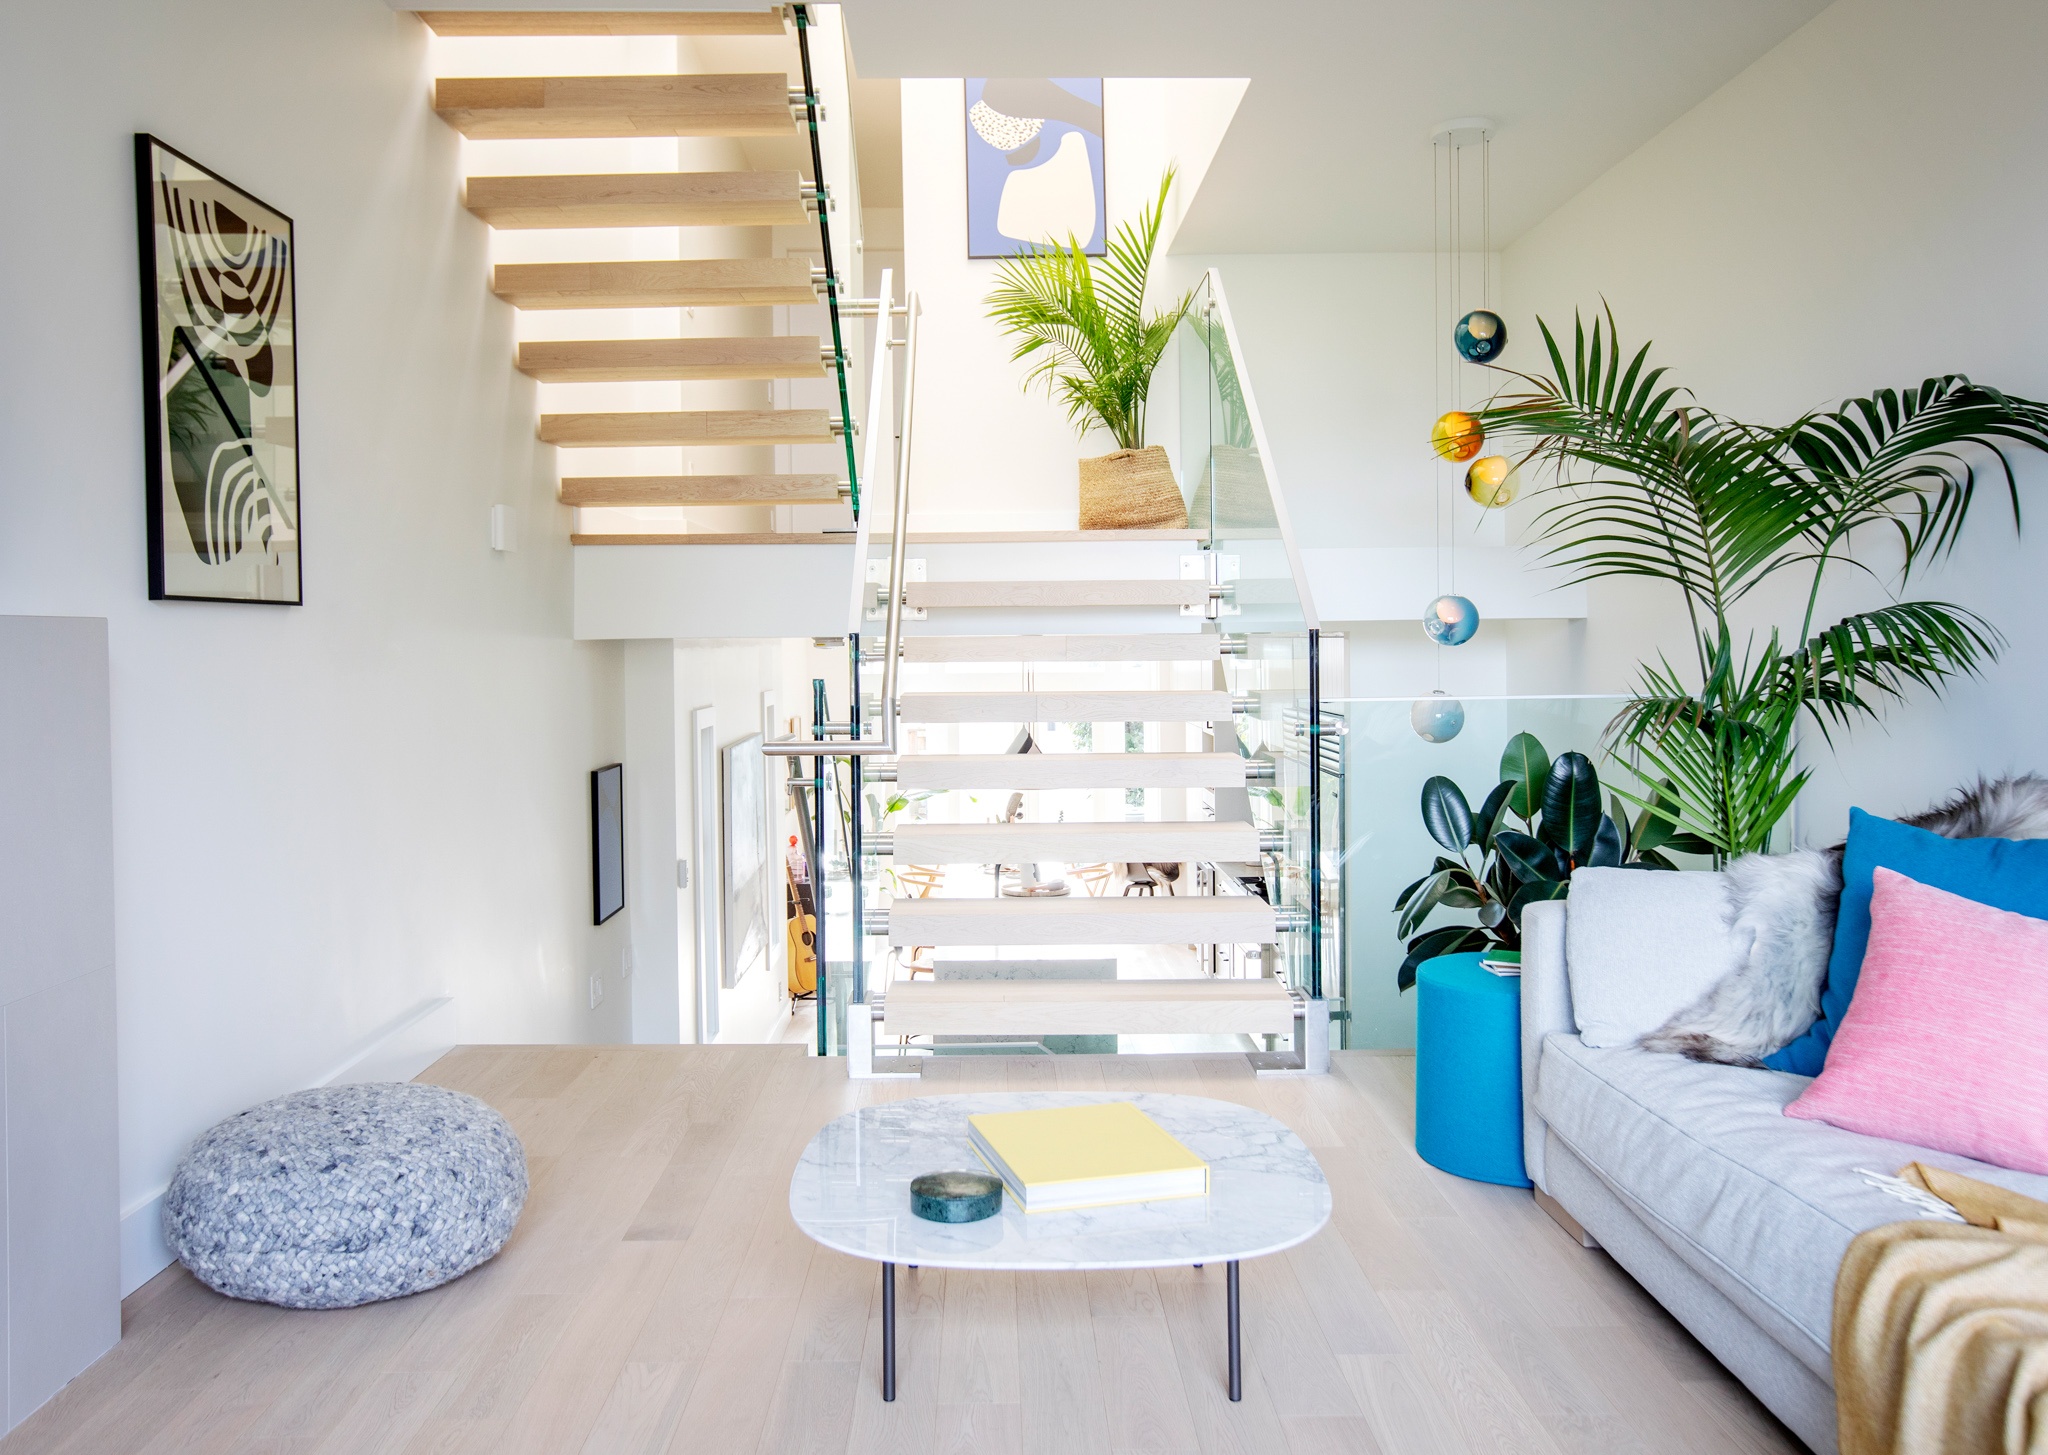 Open stairway interior character home renovation